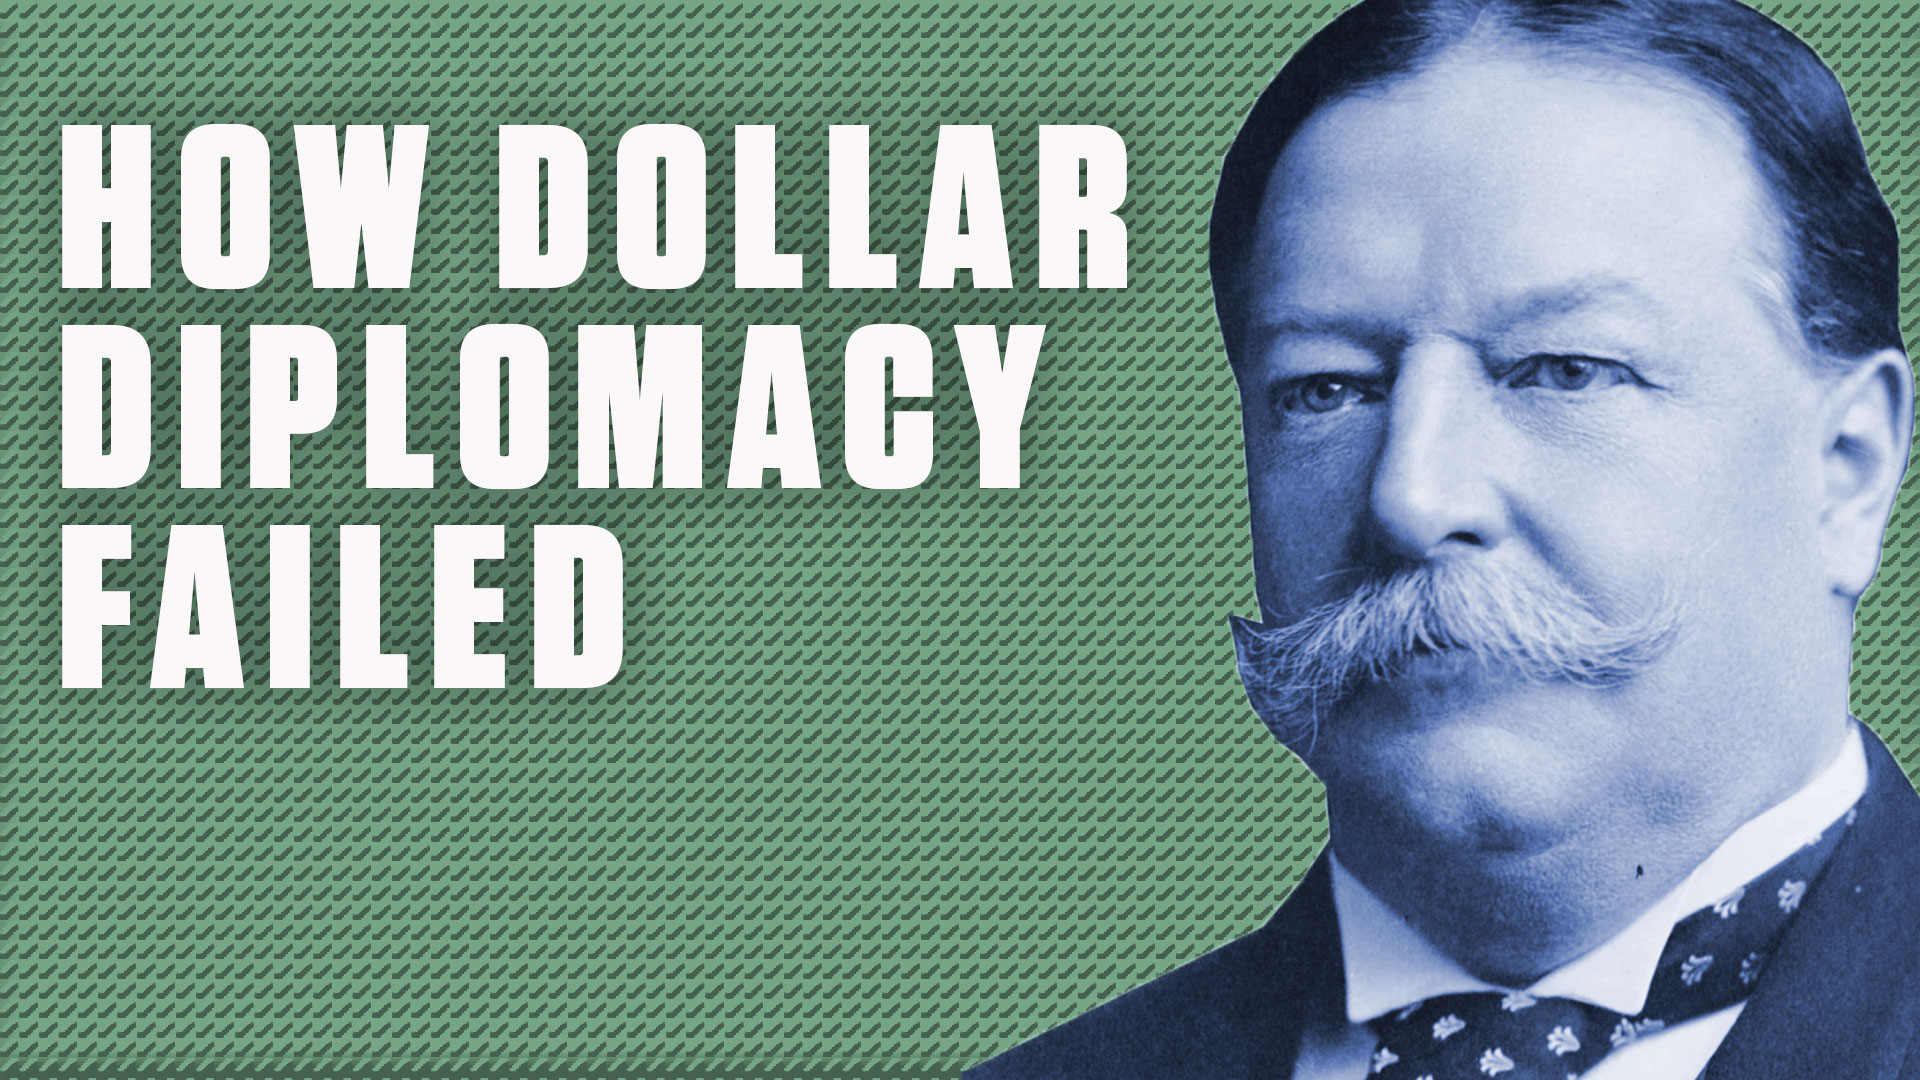 William Howard Taft - Facts, Presidency & Accomplishments